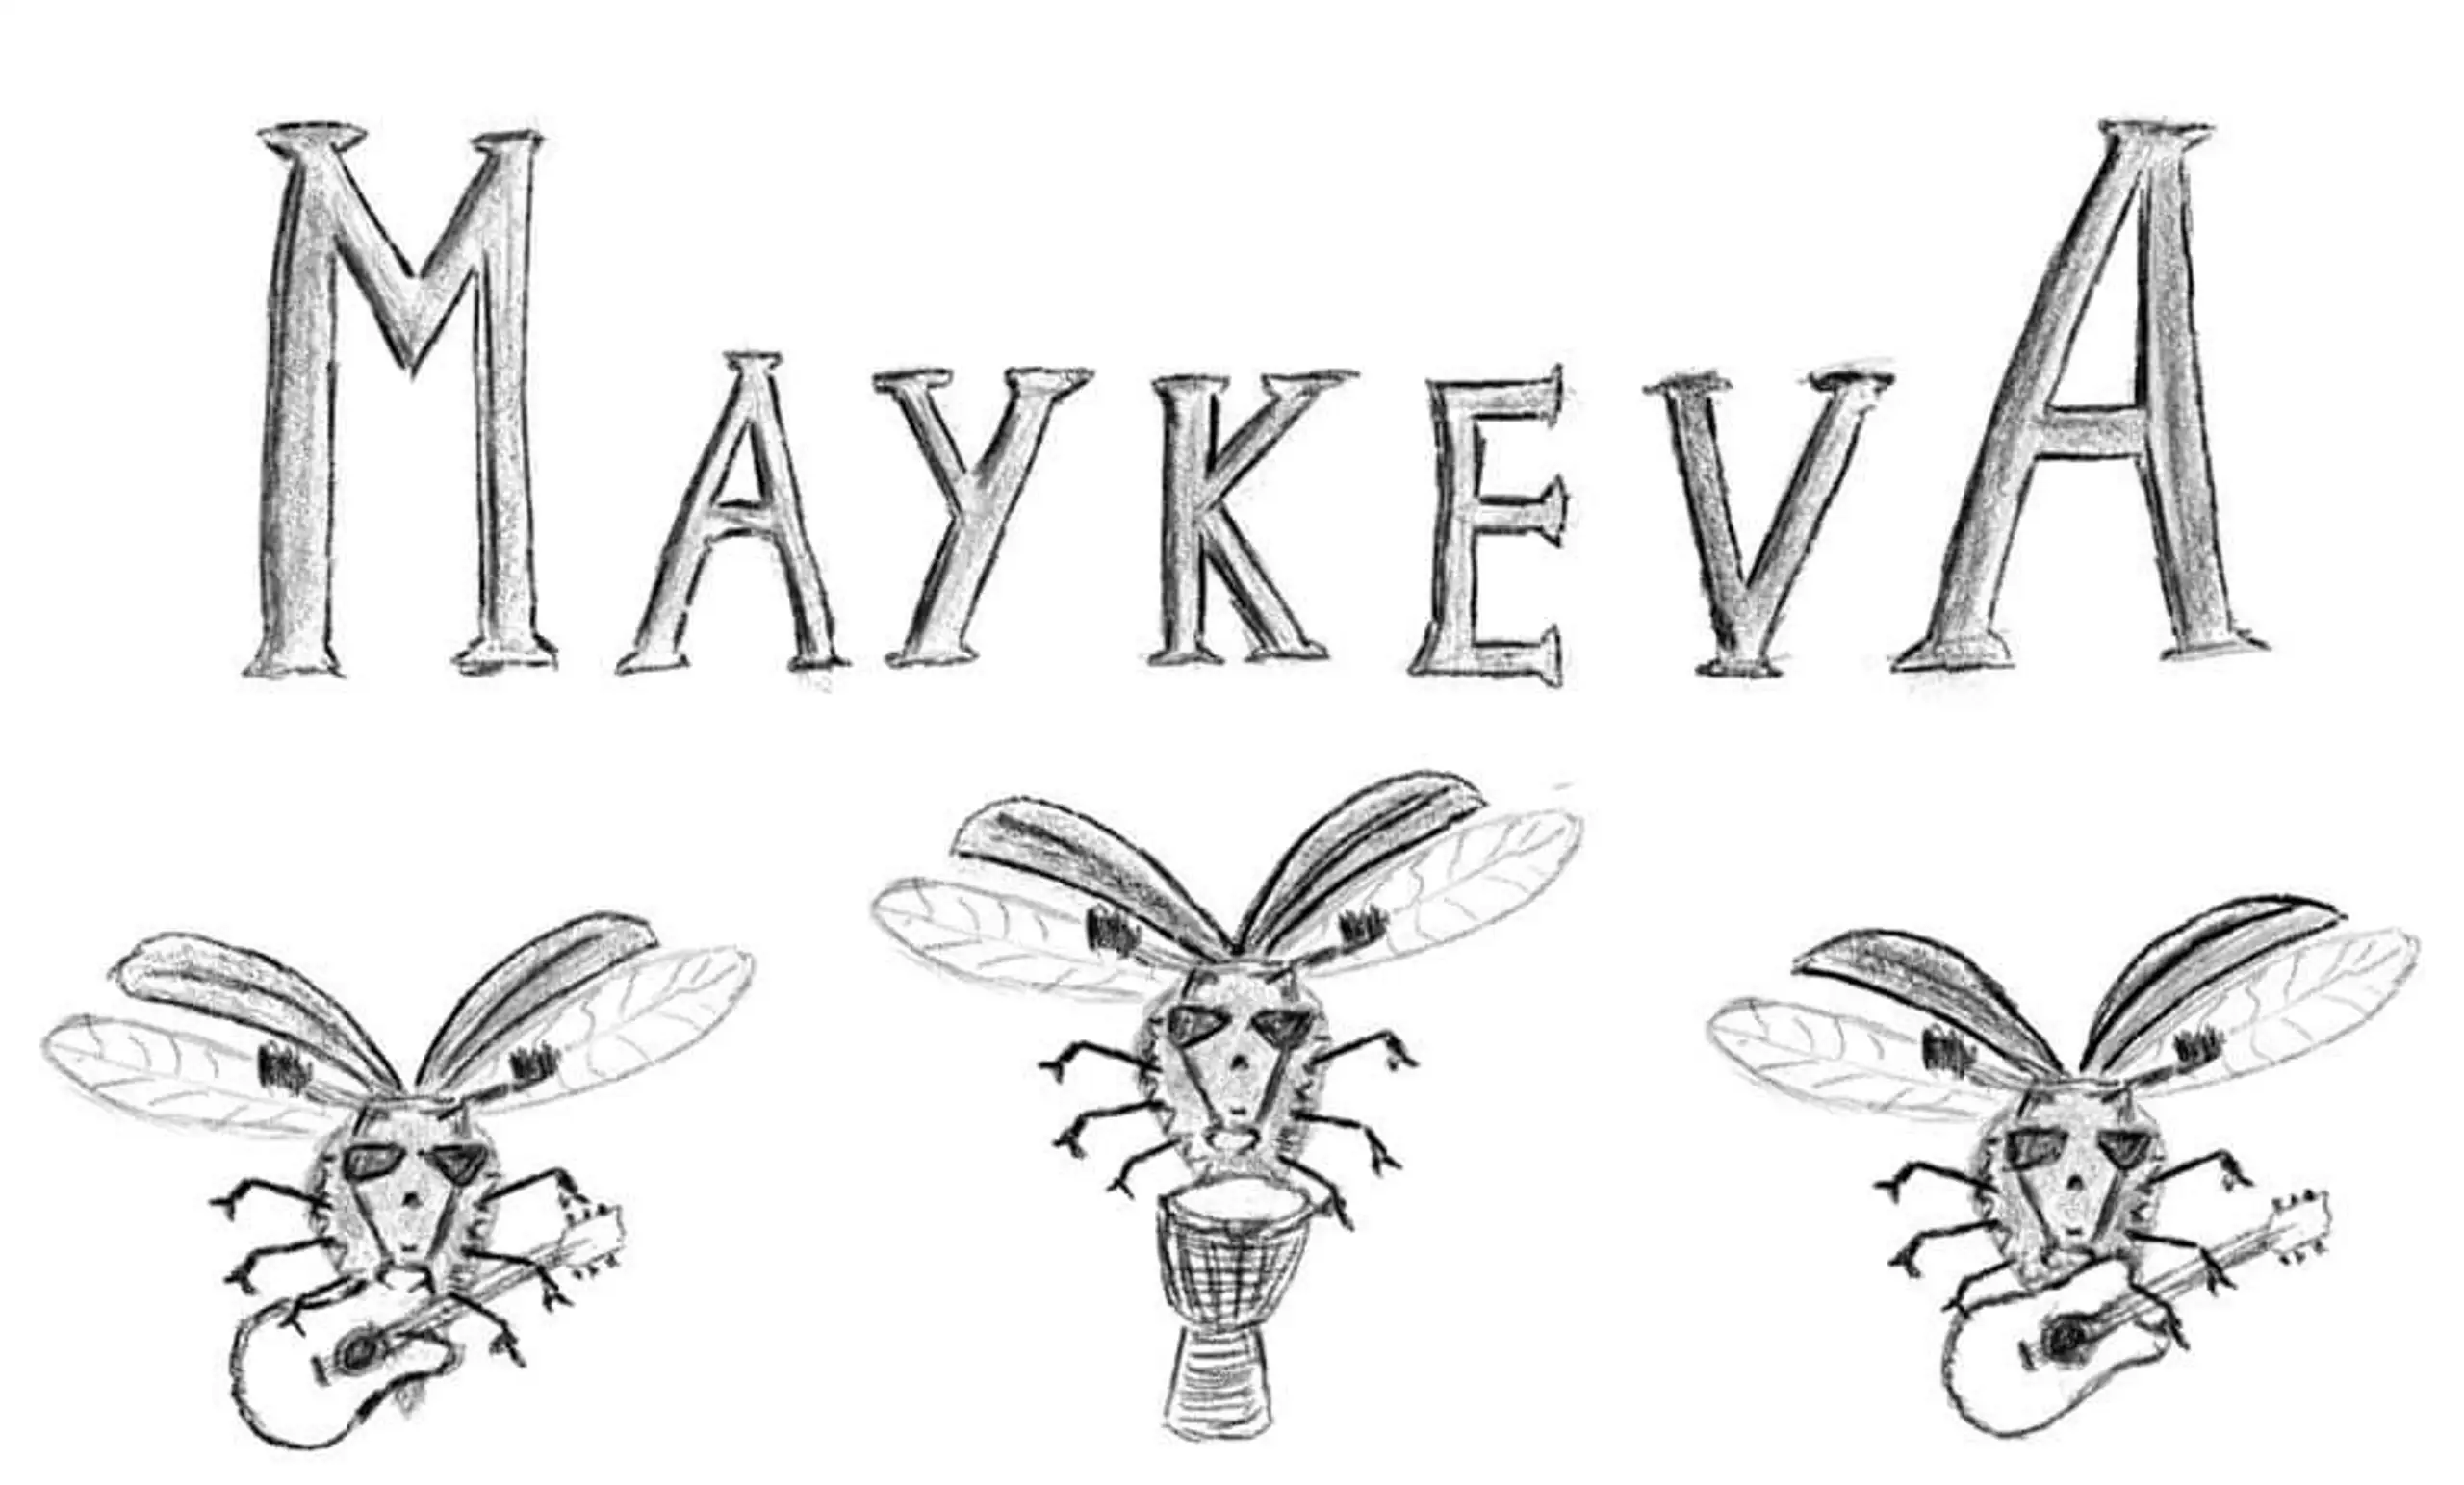 Maykeva